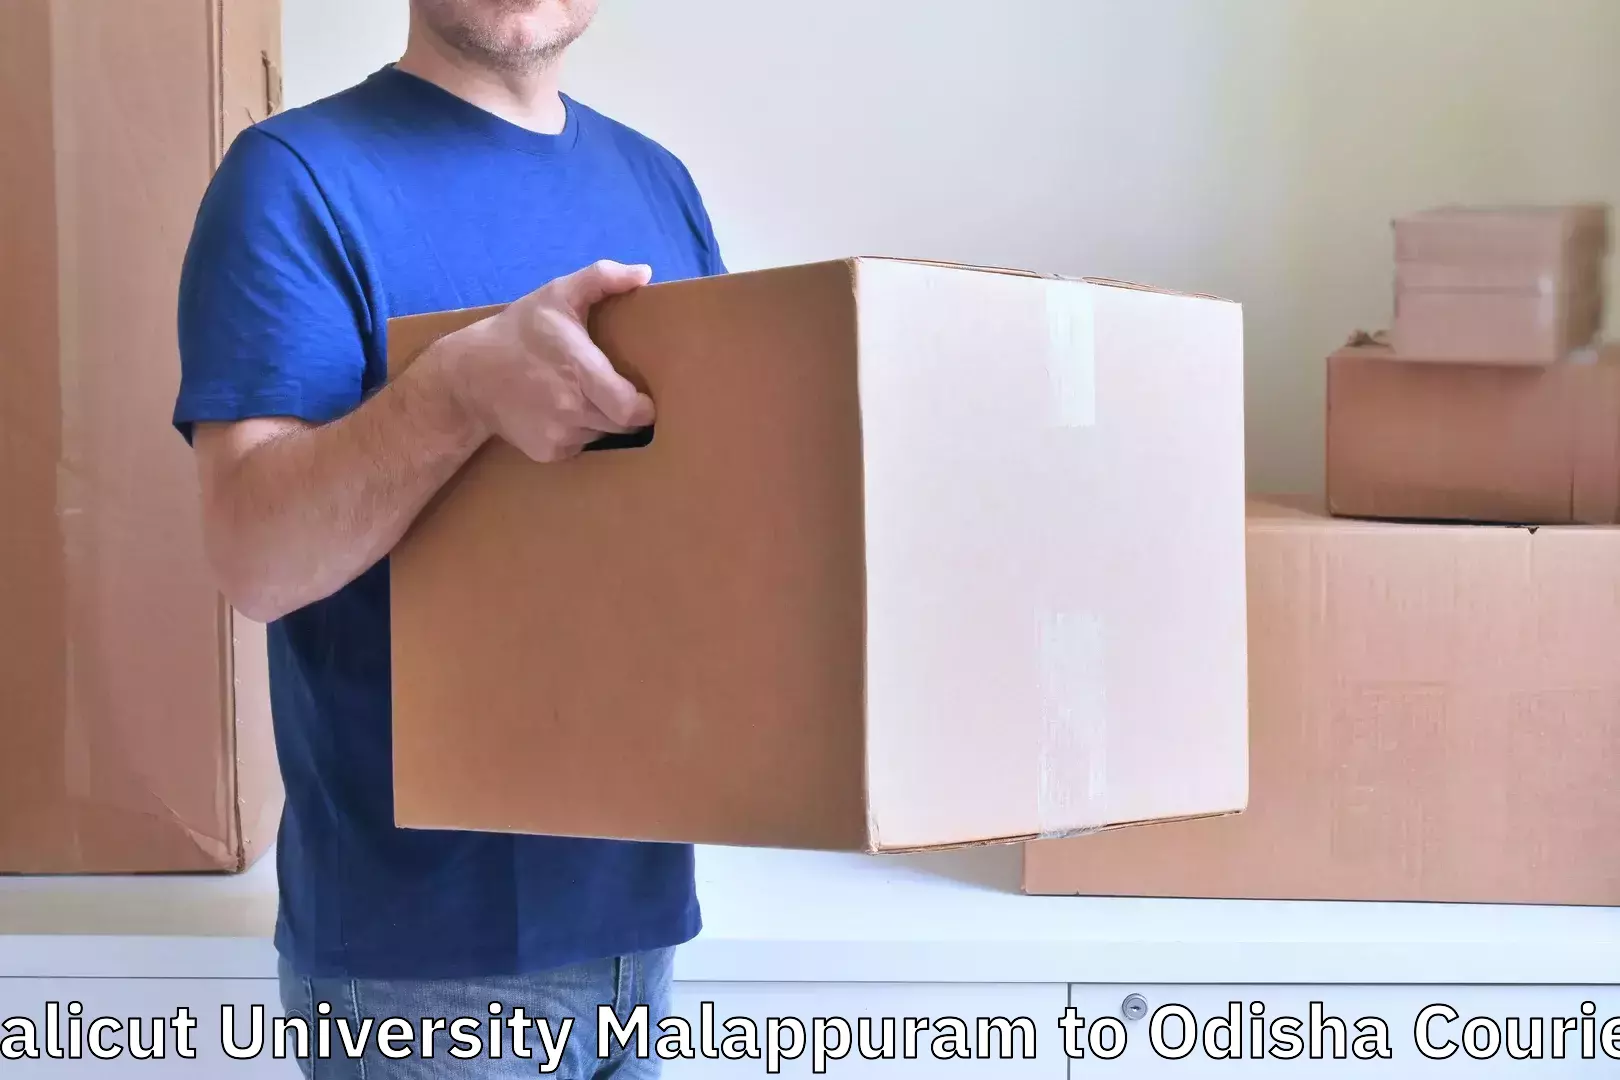 Customized luggage delivery Calicut University Malappuram to Angul